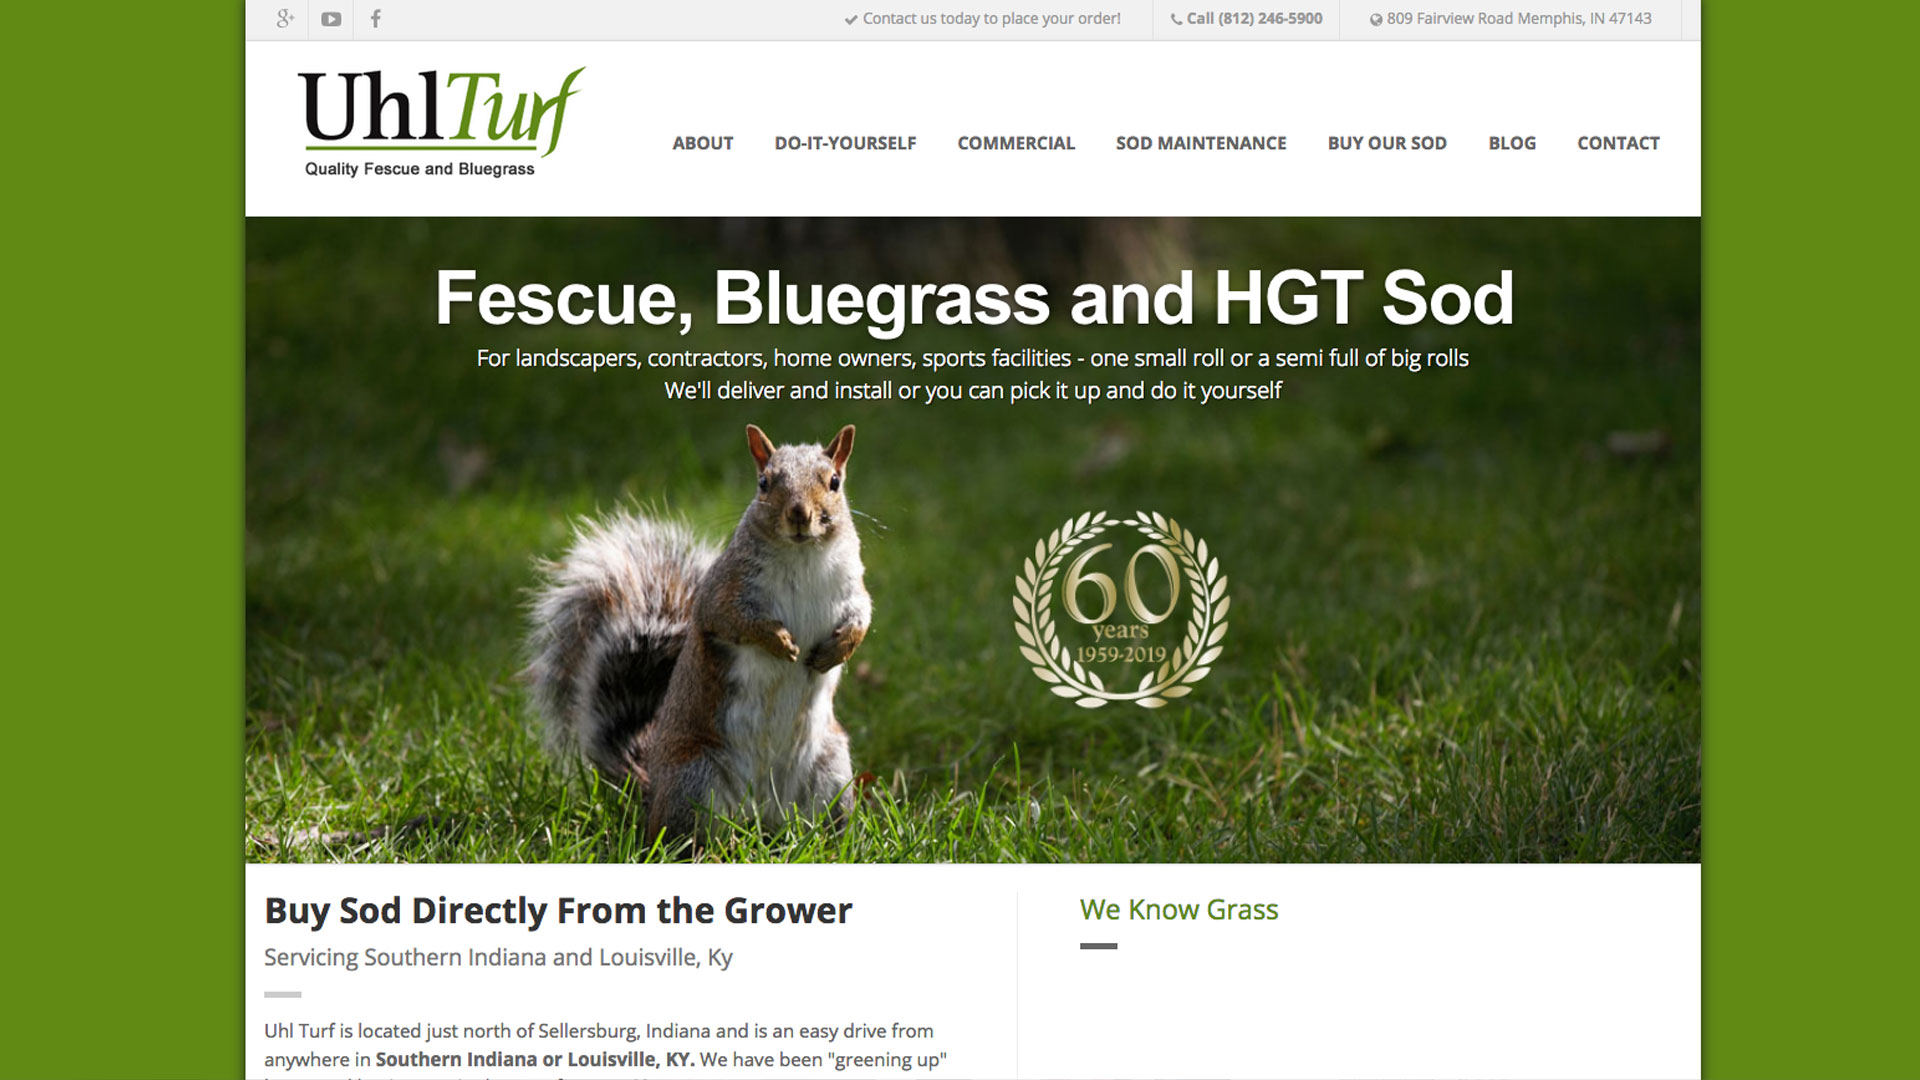 Uhl Turf website home page image